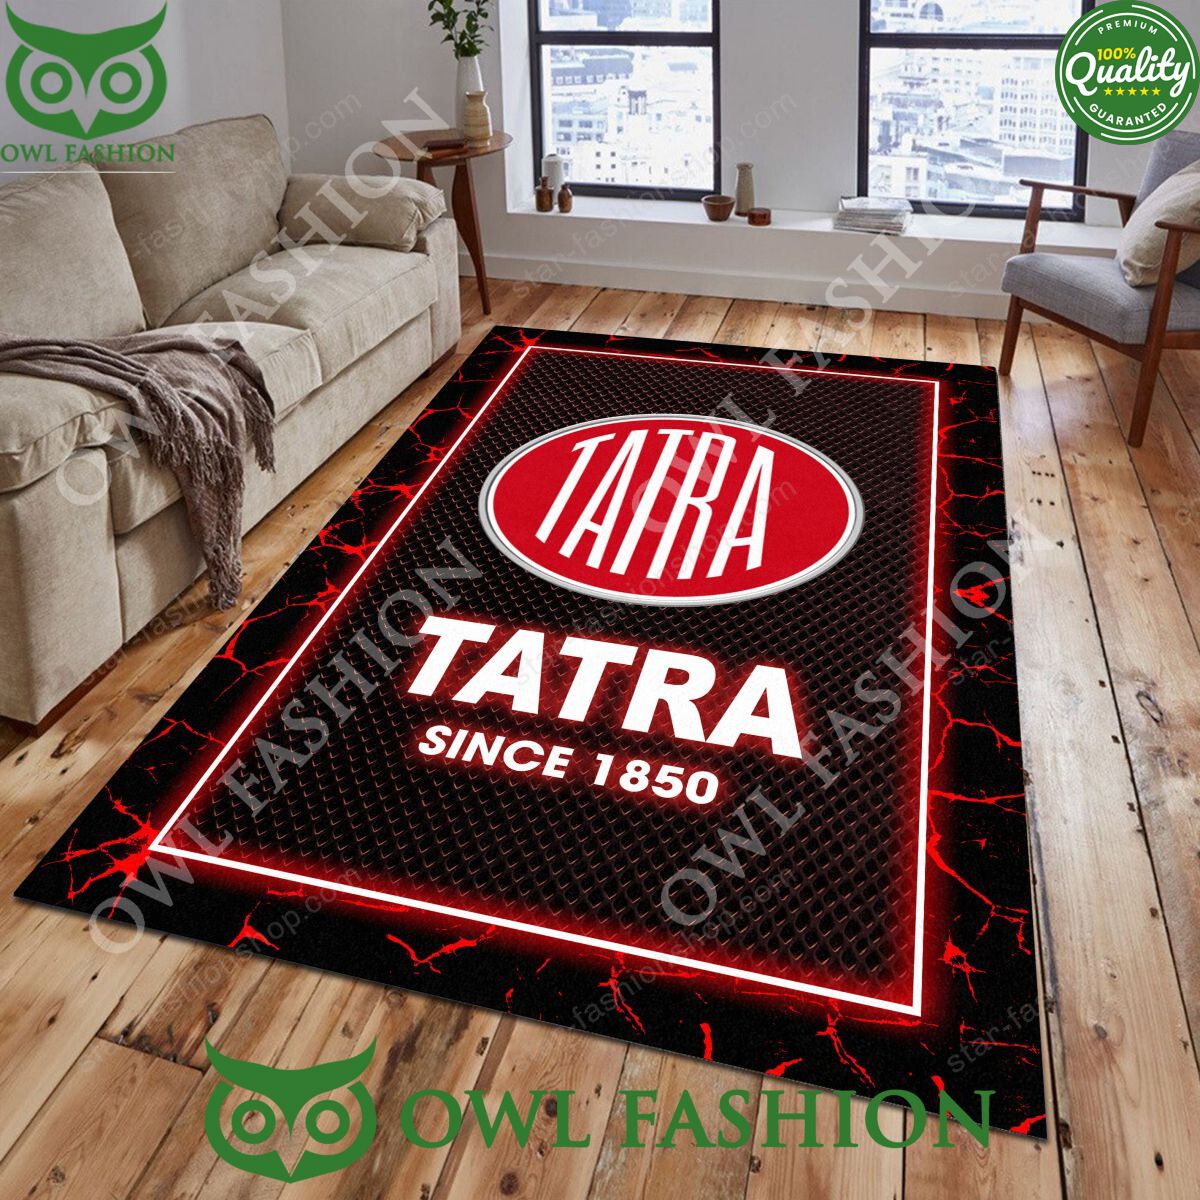 Tatra Czech vehicle manufacturer Carpet Rug